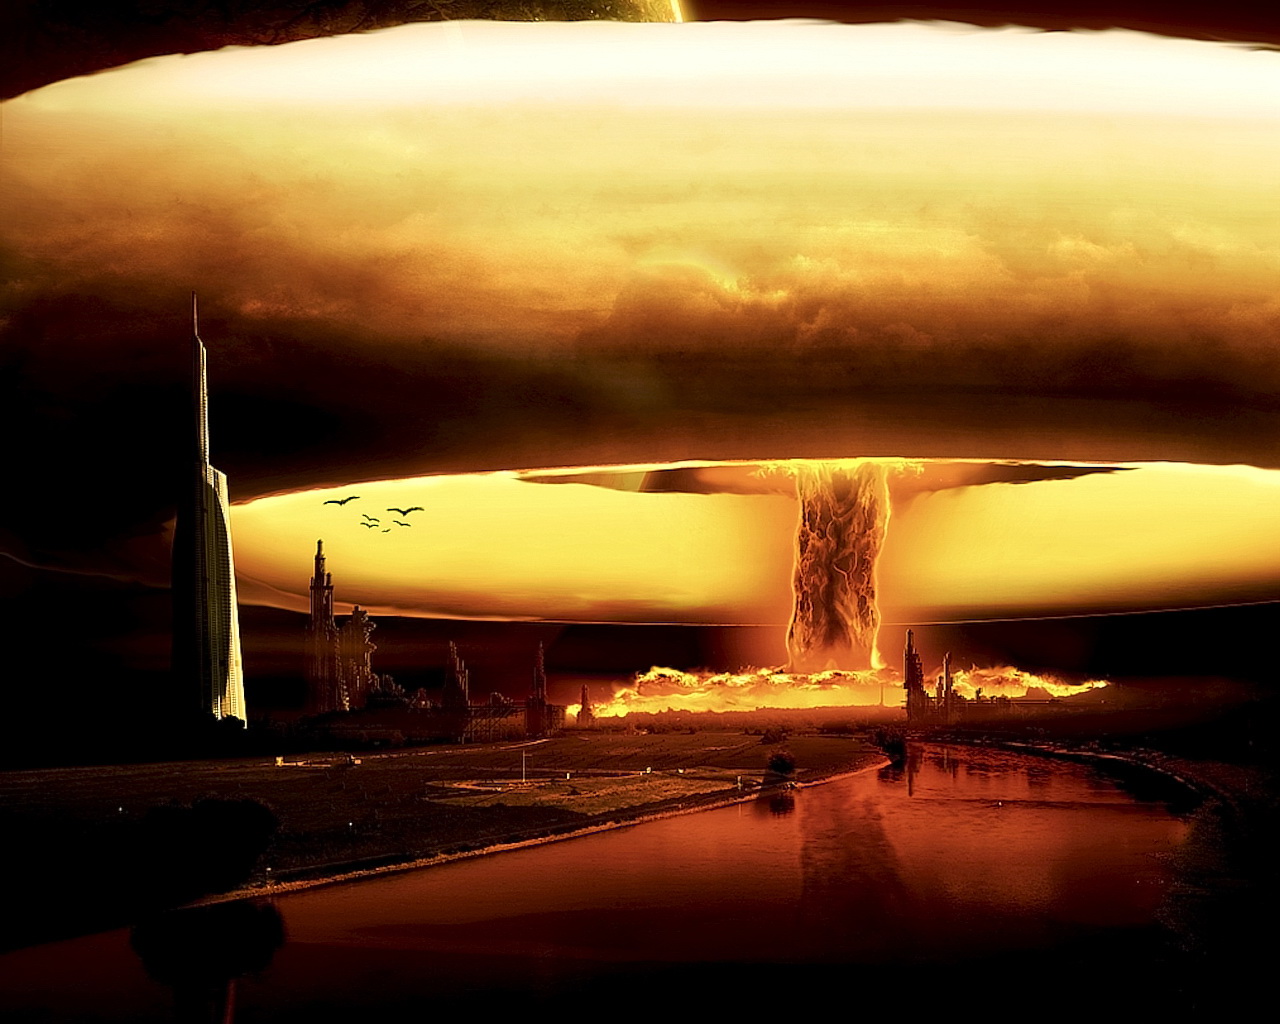 Photoshop_The_nuclear_explosion_bomb_011528_.jpg